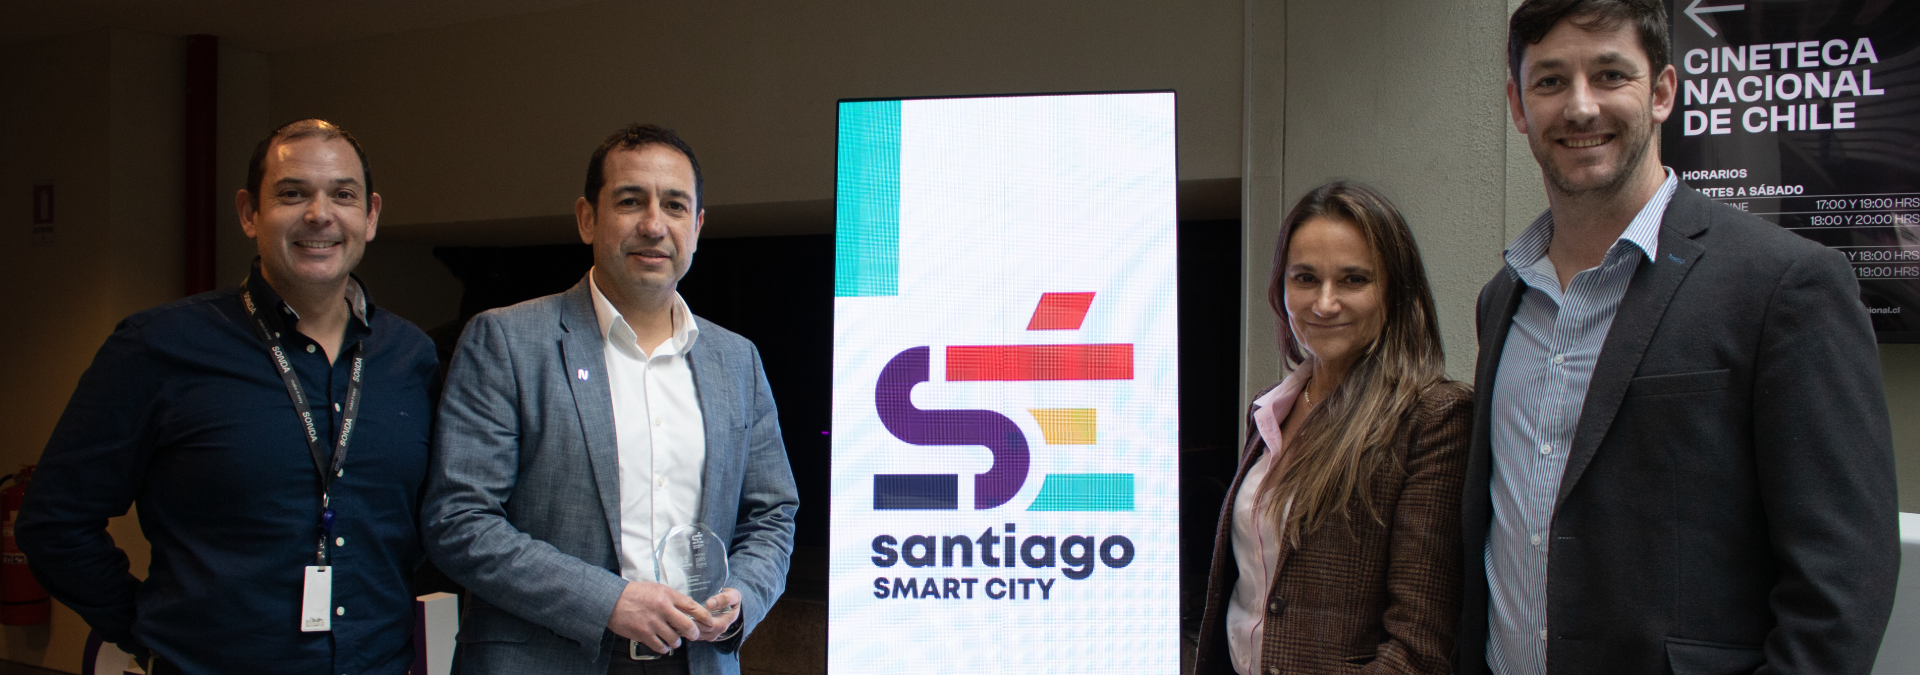 Smart City, Mobility, IoT, IA, reconocimiento, premio